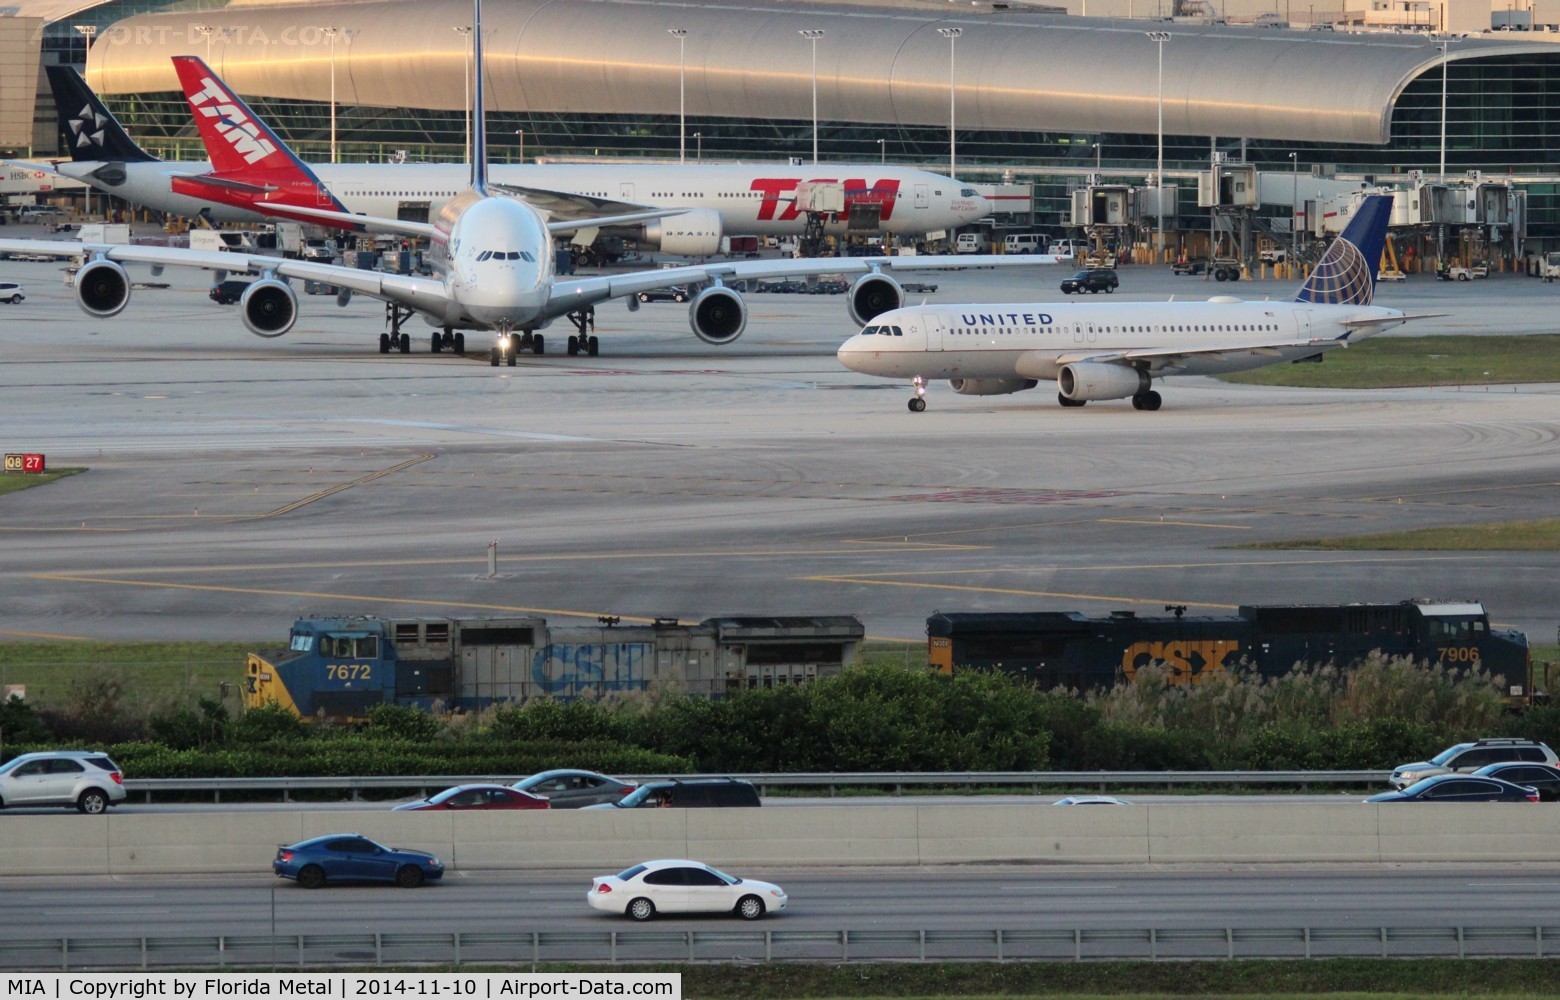 Miami International Airport (MIA) - Planes, trains and automobiles